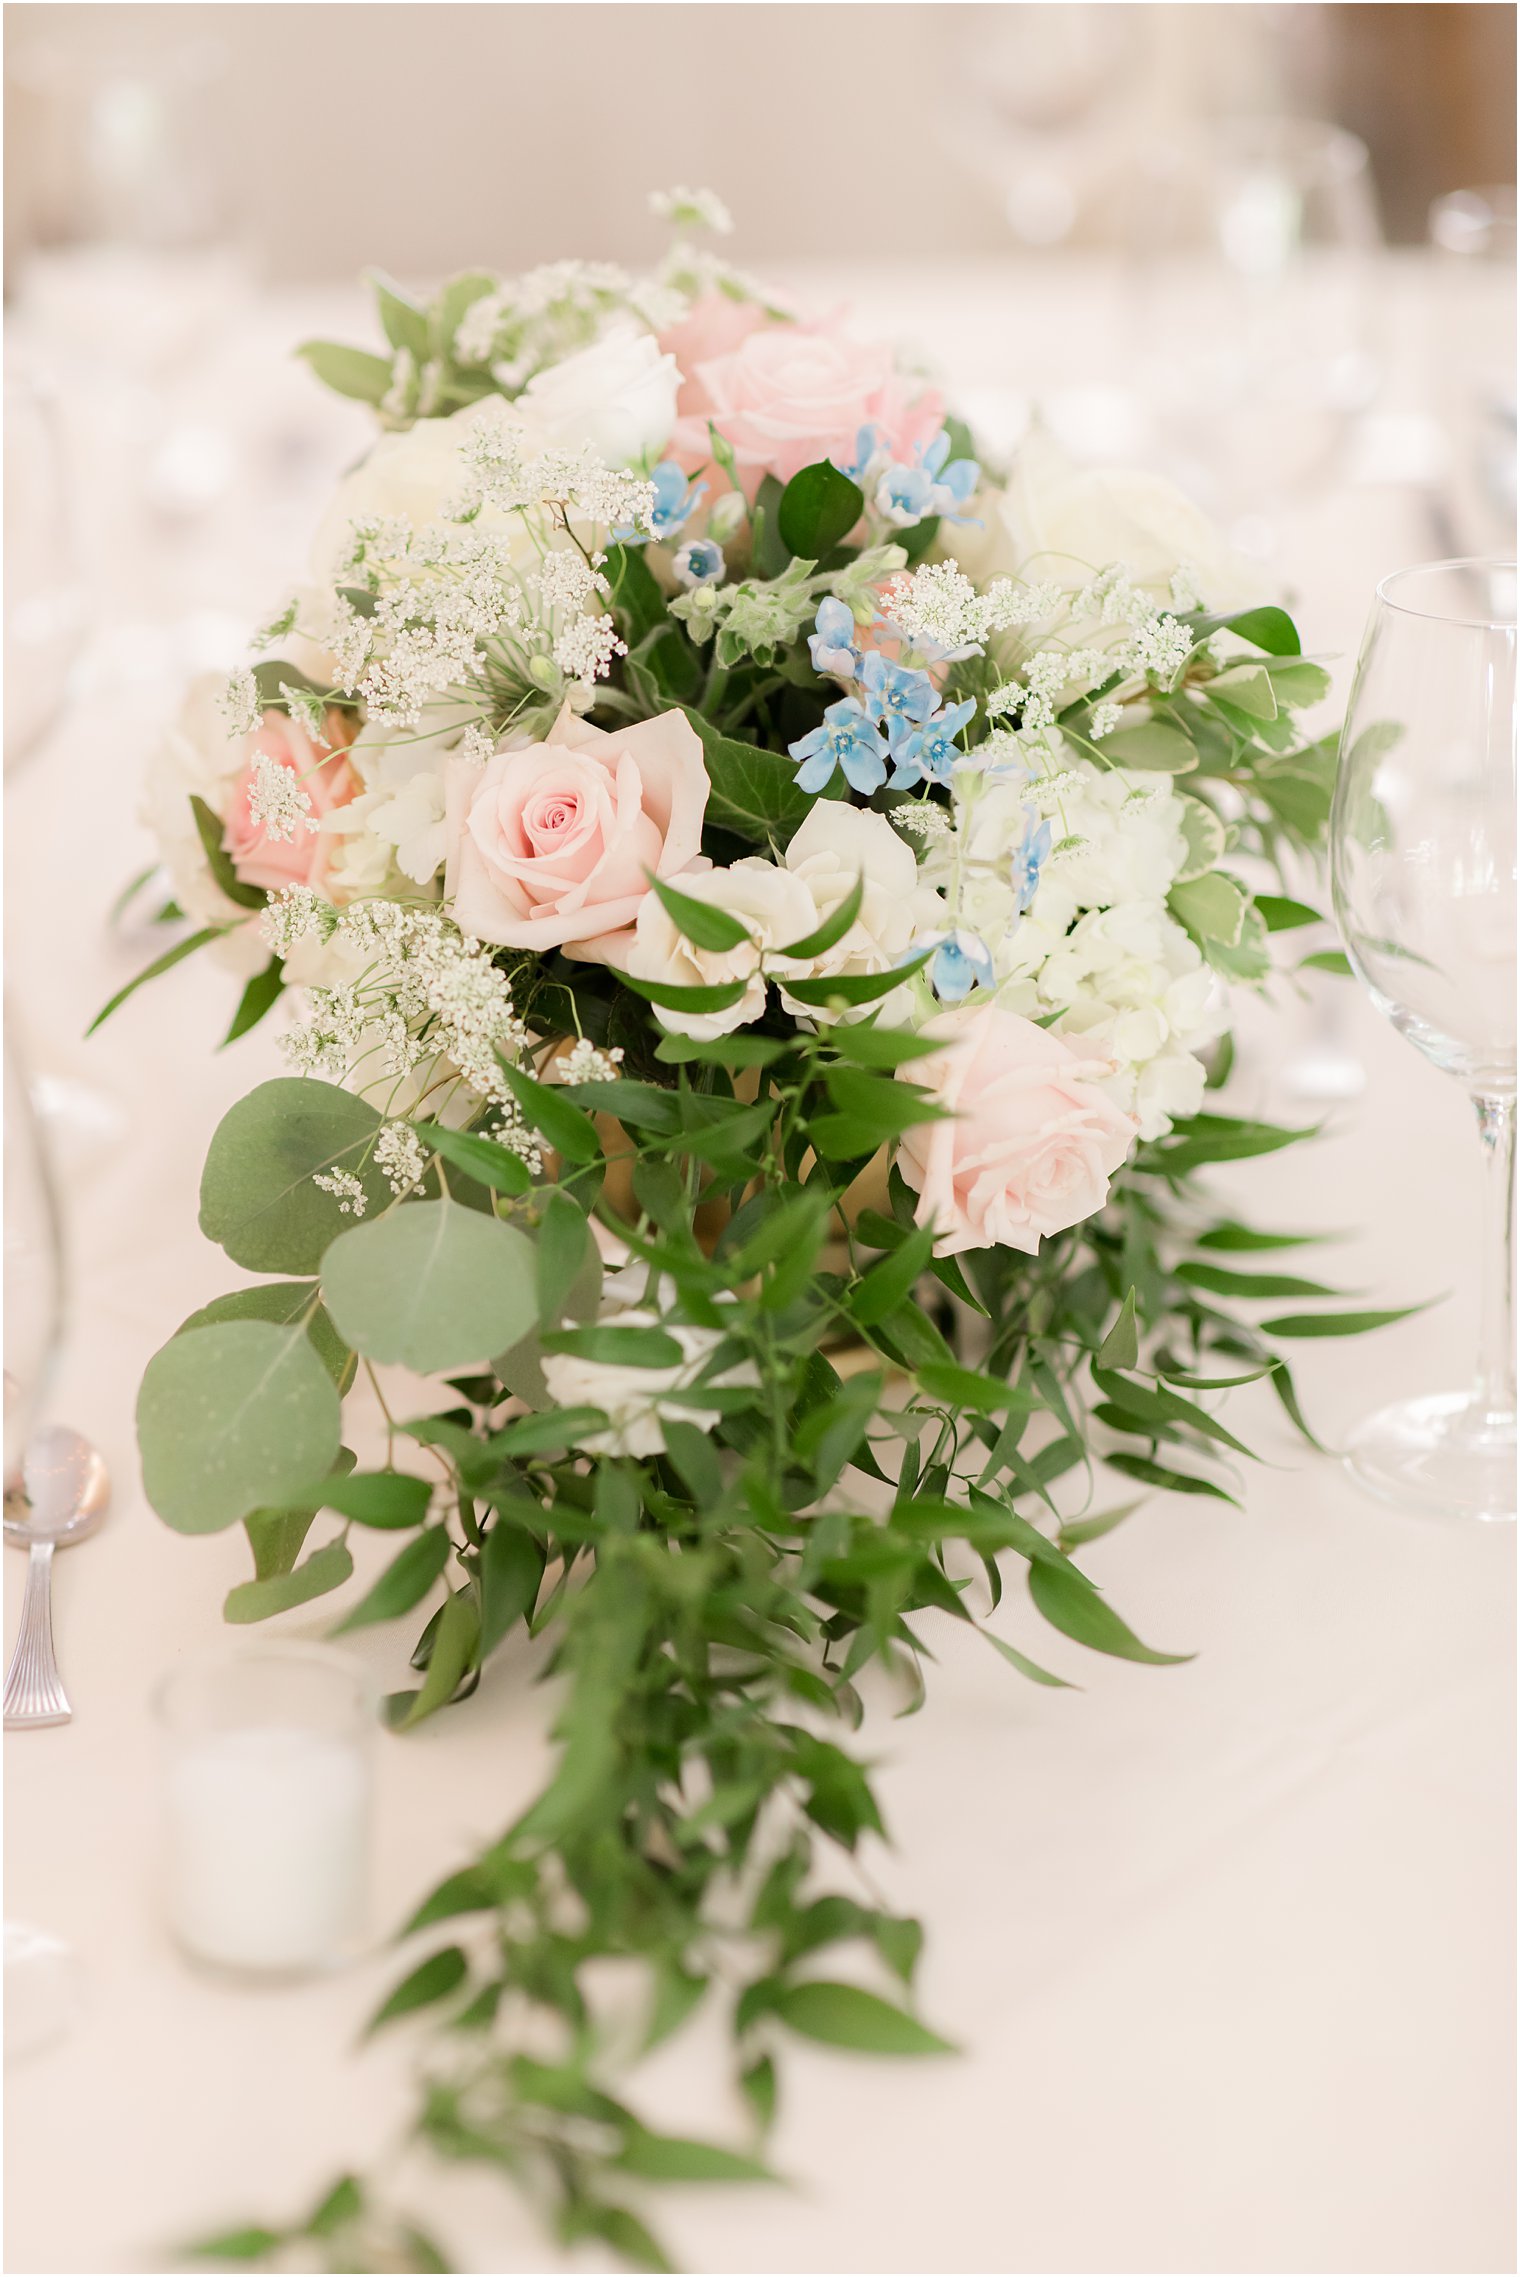 wedding floral arrangement for reception with pops of blue